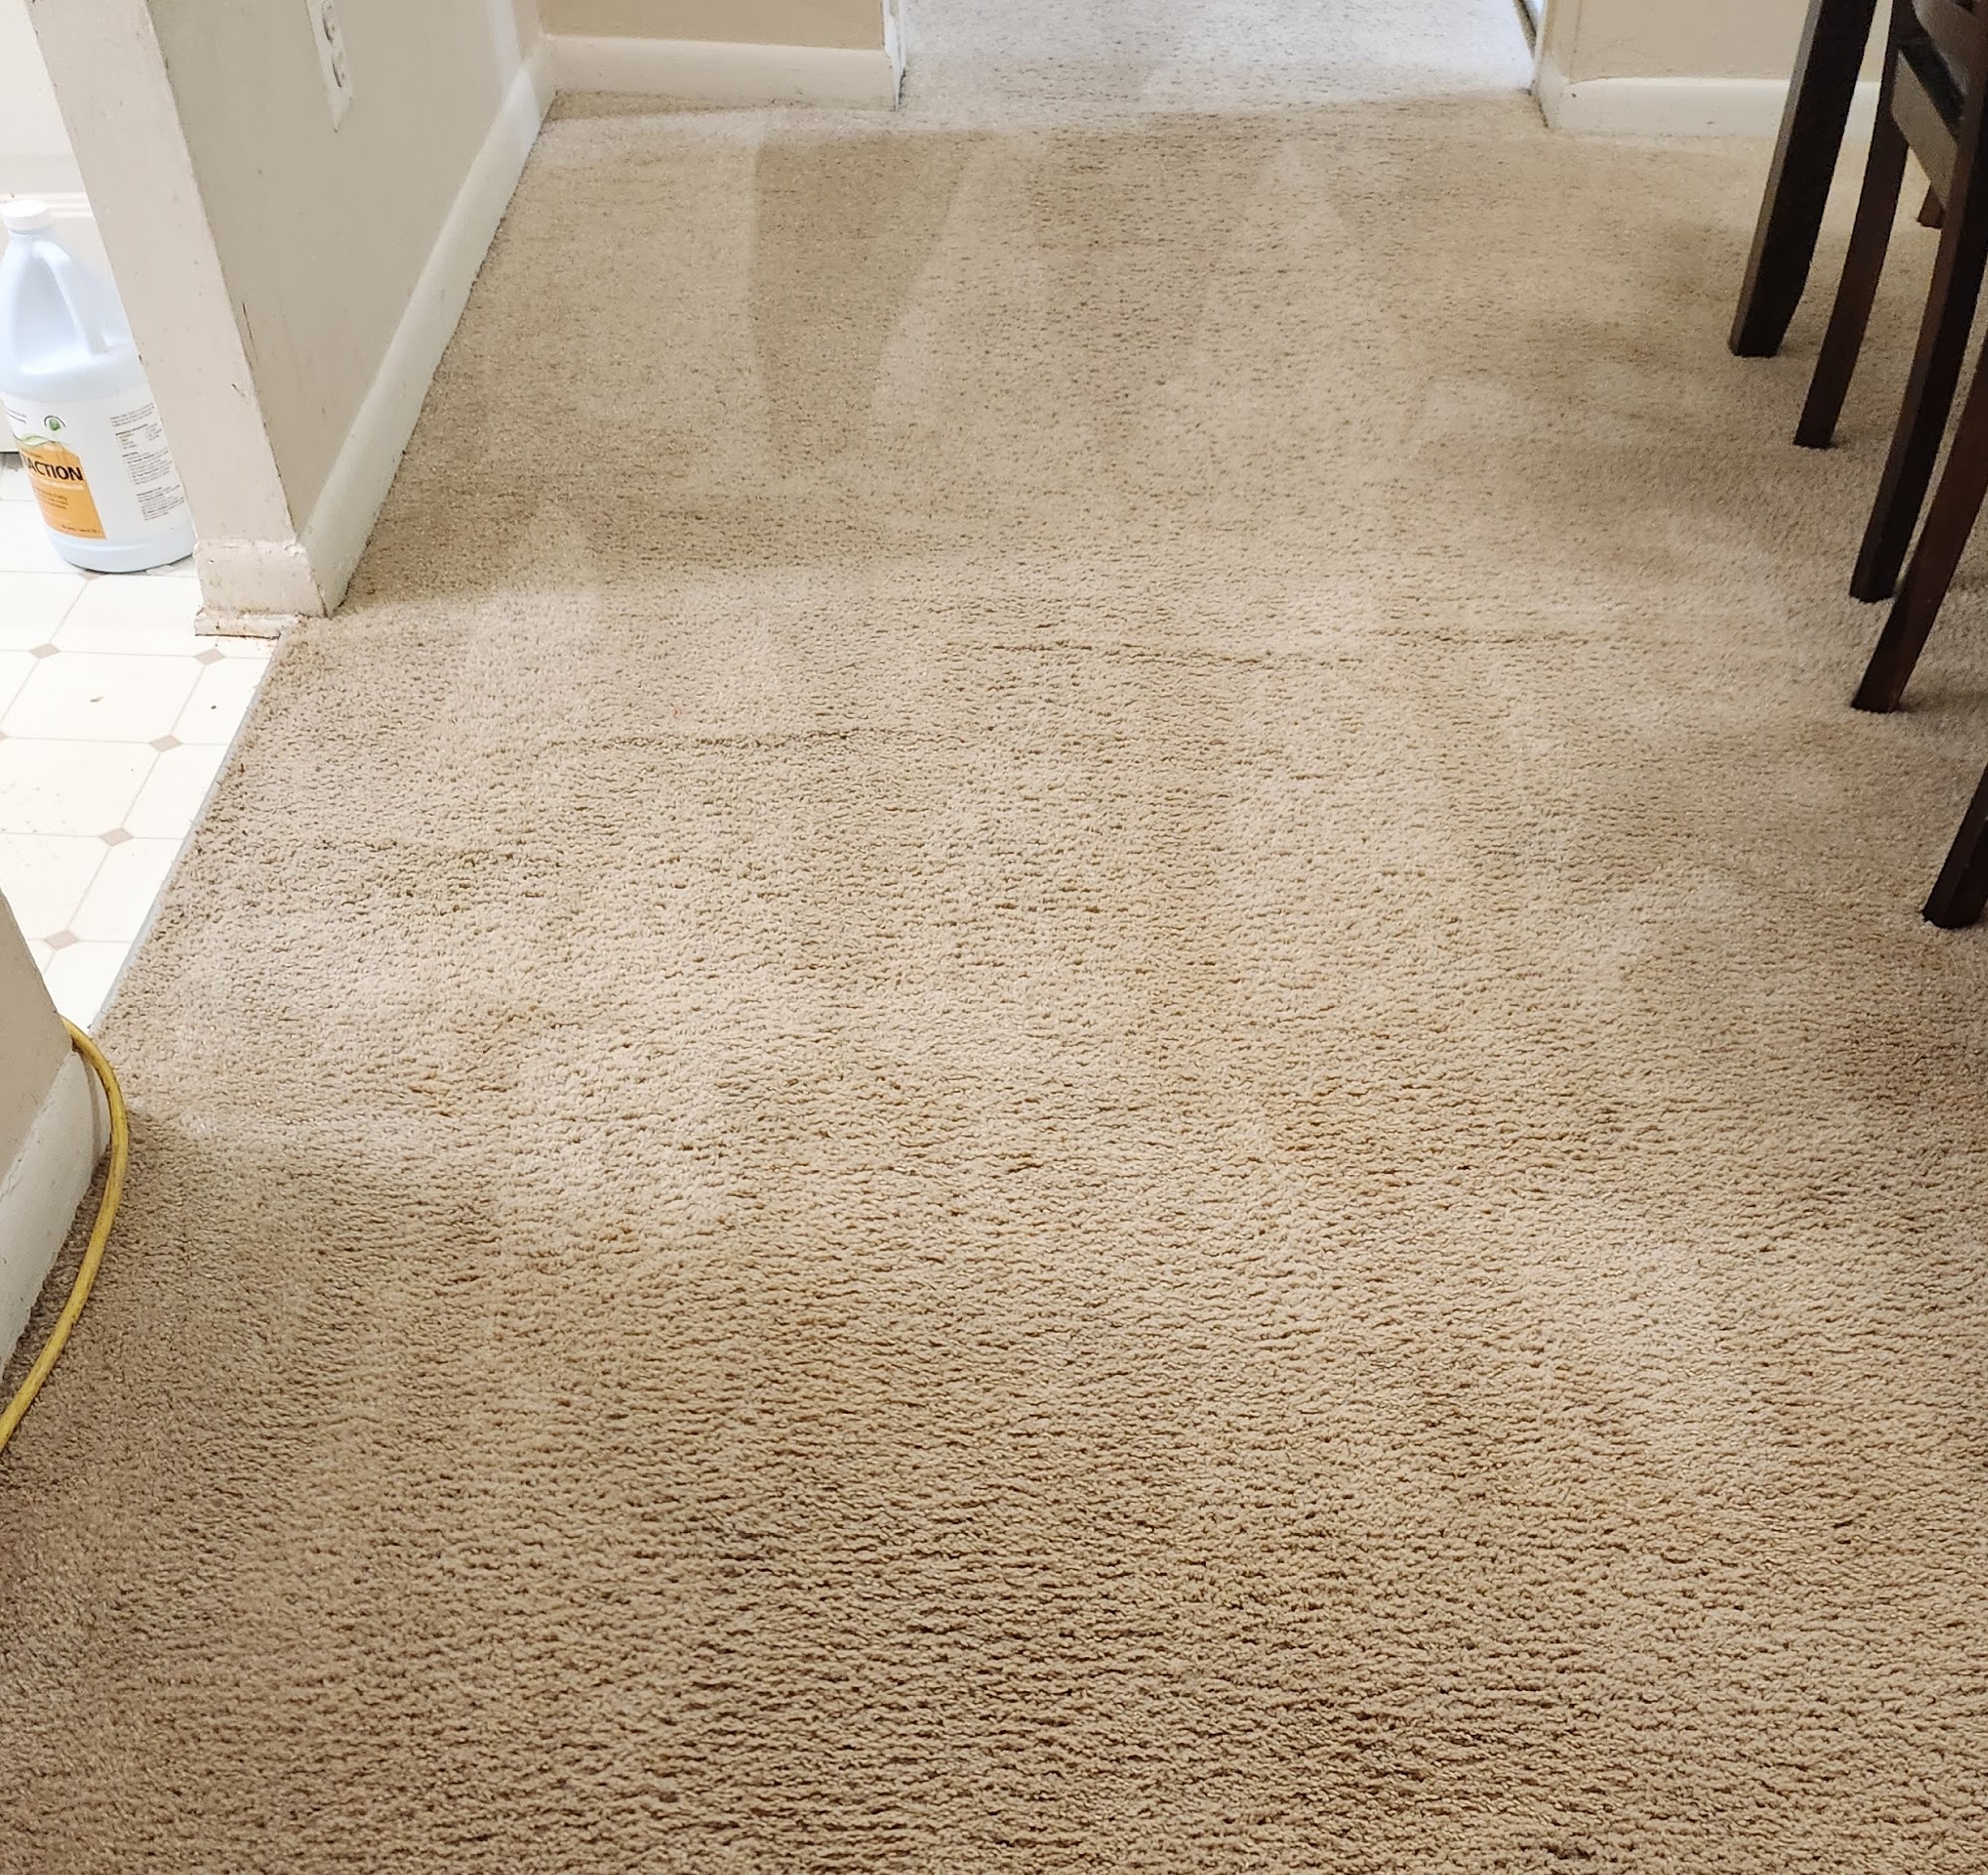 Make You Clean Carpet & Hardwood Cleaning